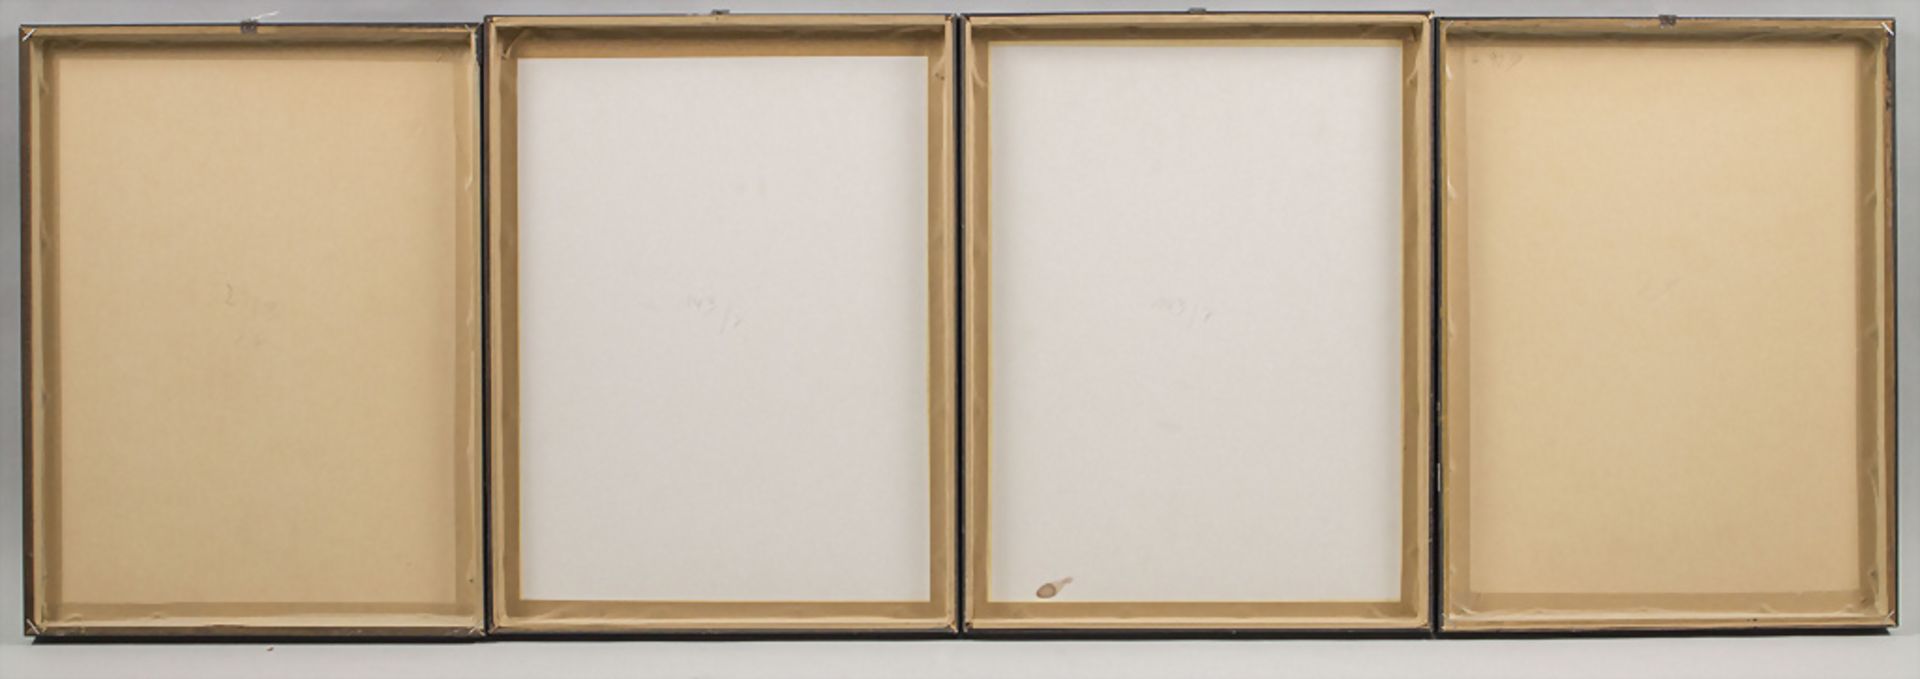 Johnny FRIEDLAENDER (Pless 1912-1992 Paris), 'Etudes II', Galerie Schmücking, 1983 - Image 8 of 11